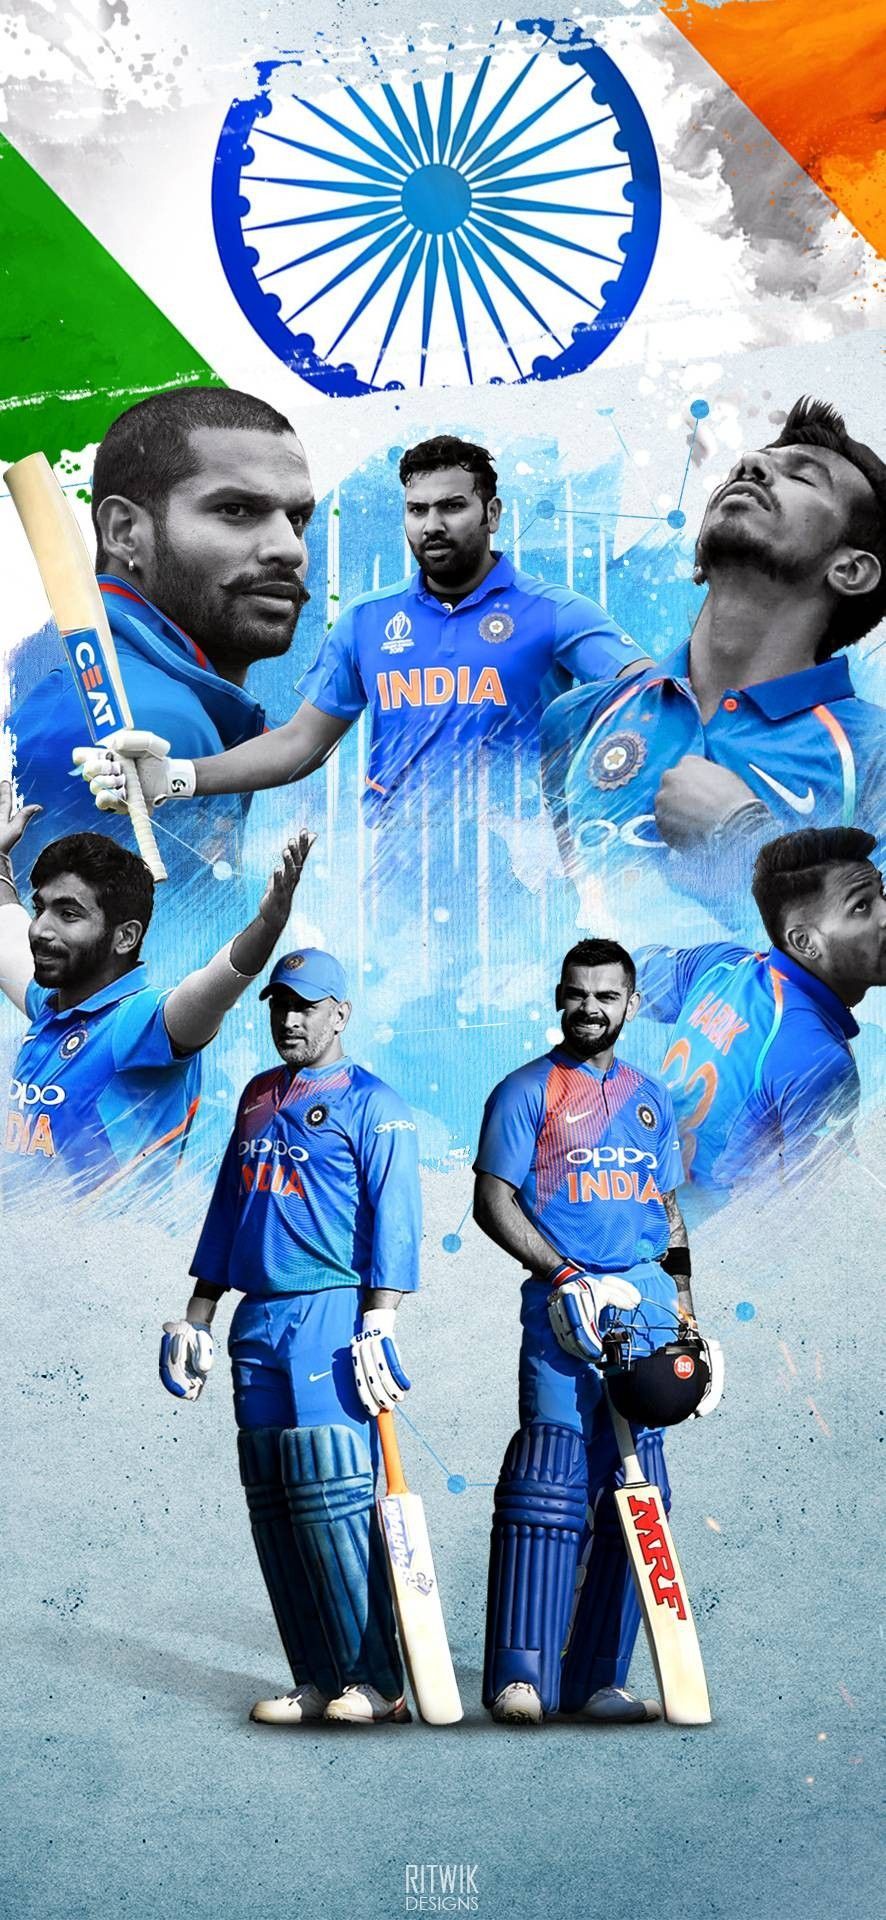 TEAM INDIA. Cricket wallpaper, Cricket poster, Dhoni wallpaper